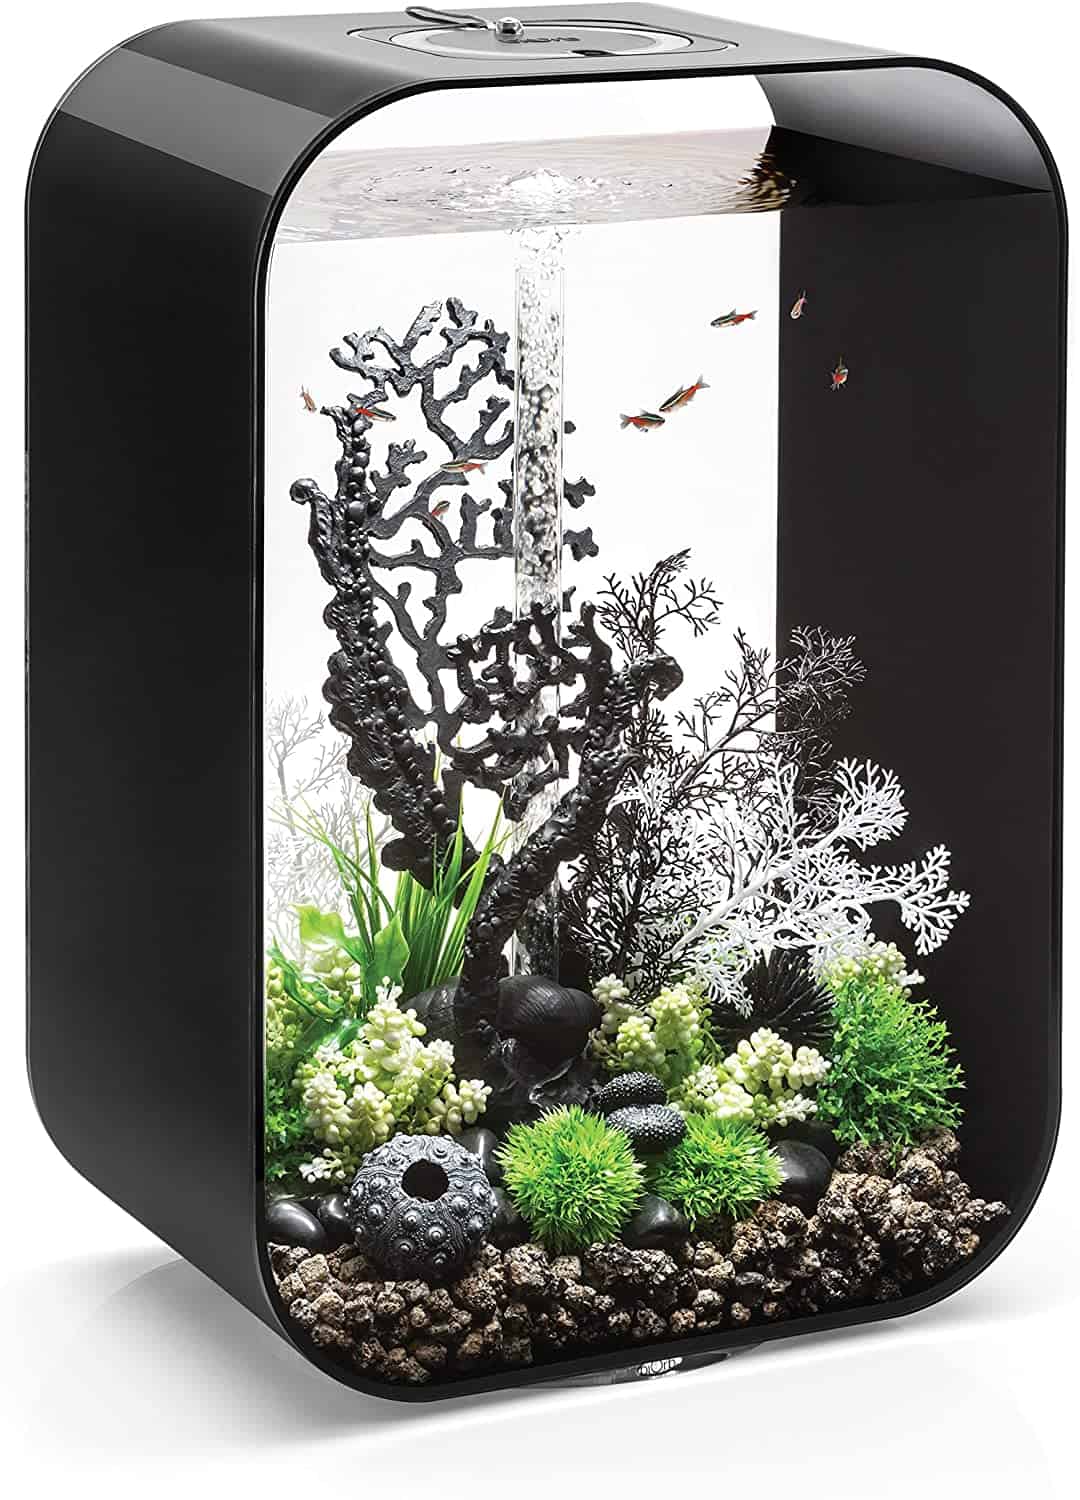 Life 15 Aquarium with LED Light - 4 Gallon, Black